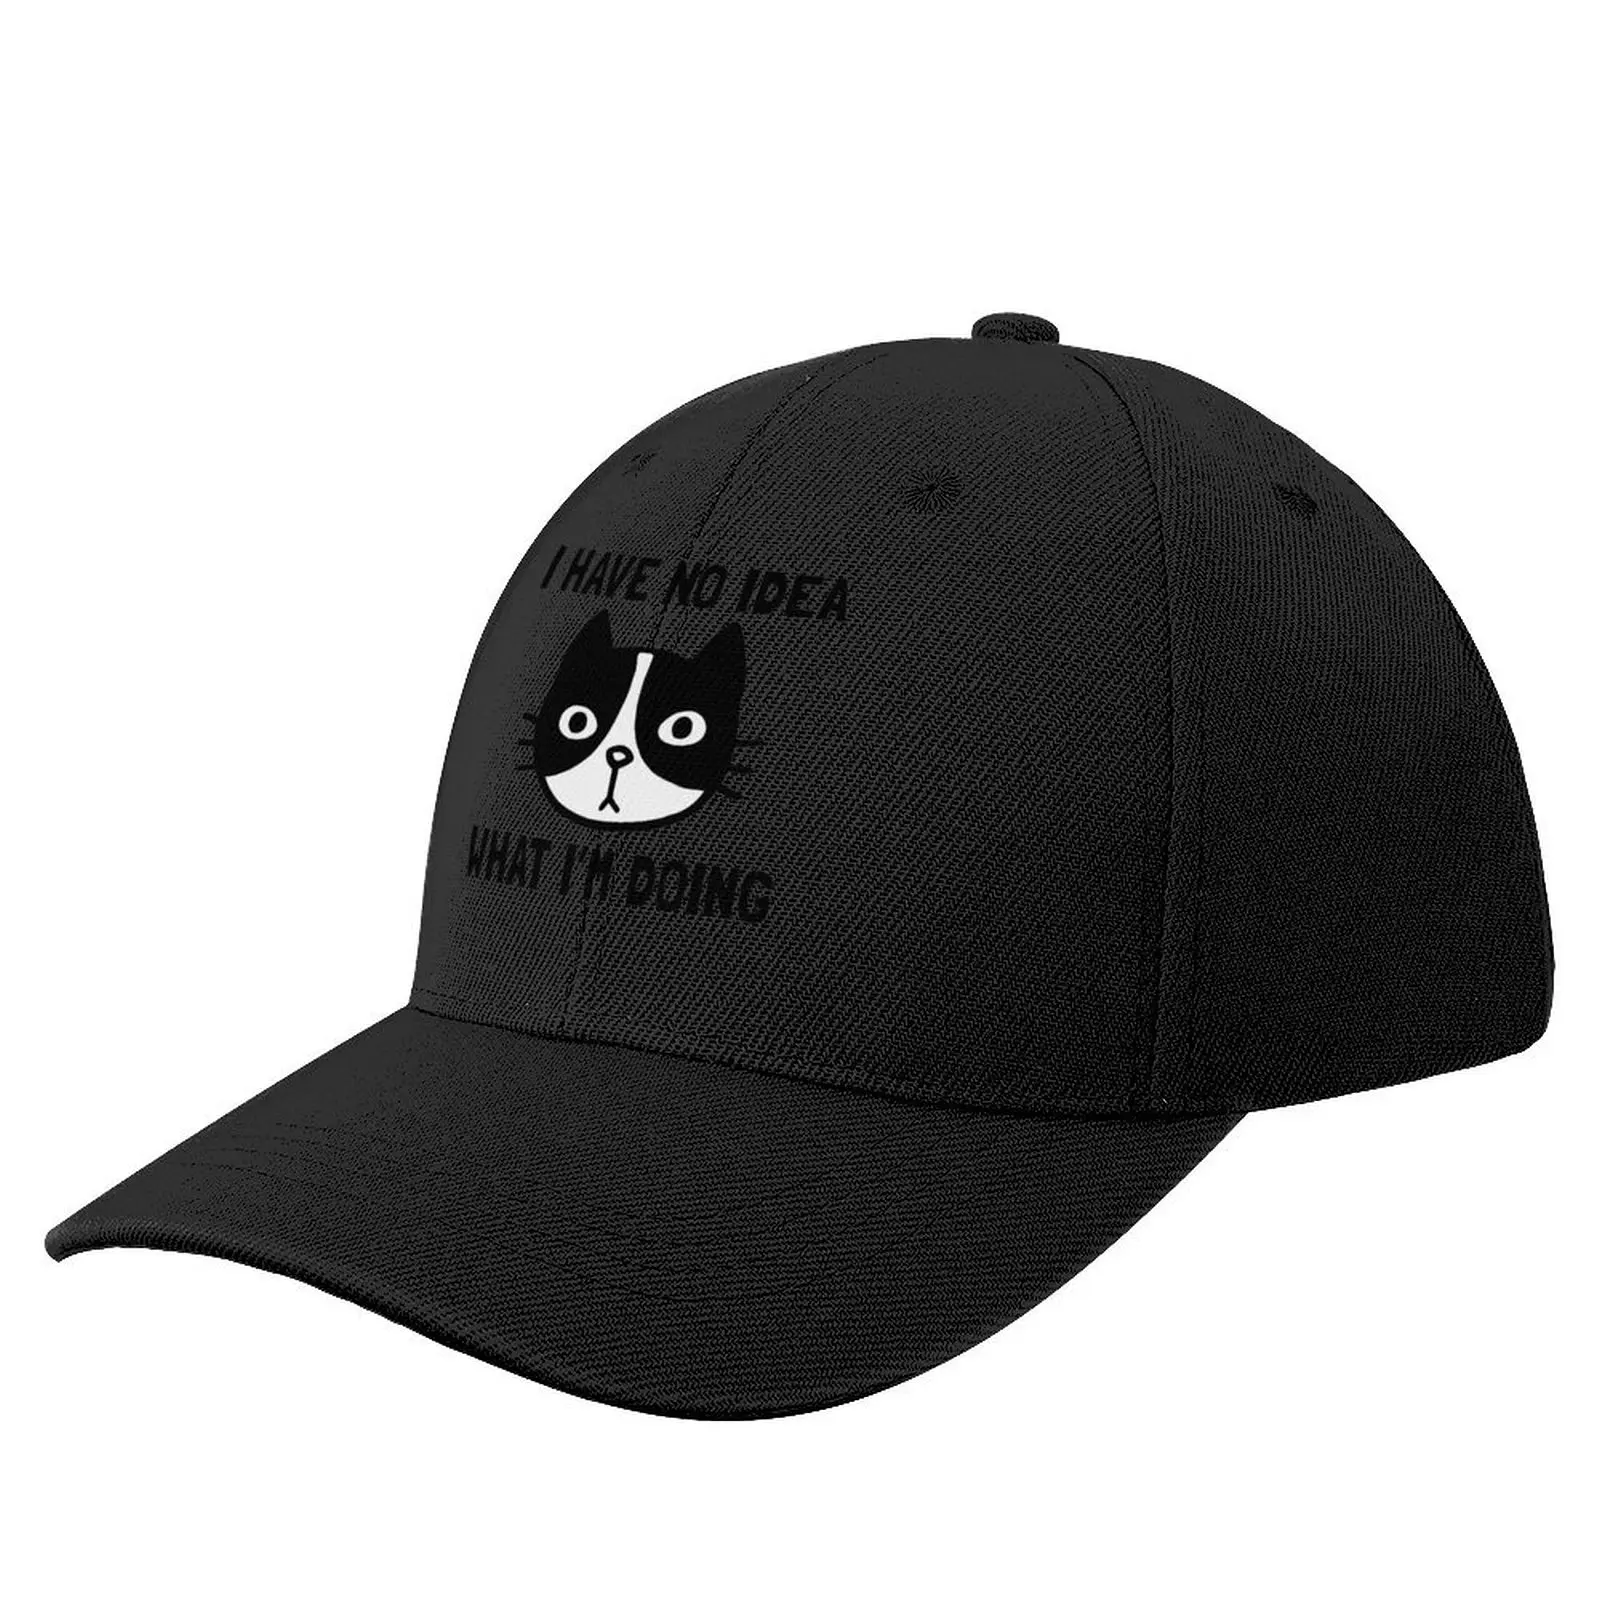 

I Have No Idea What I'm Doing Black and White Cat Baseball Cap western Hat Fishing cap hard hat Trucker Hats For Men Women's